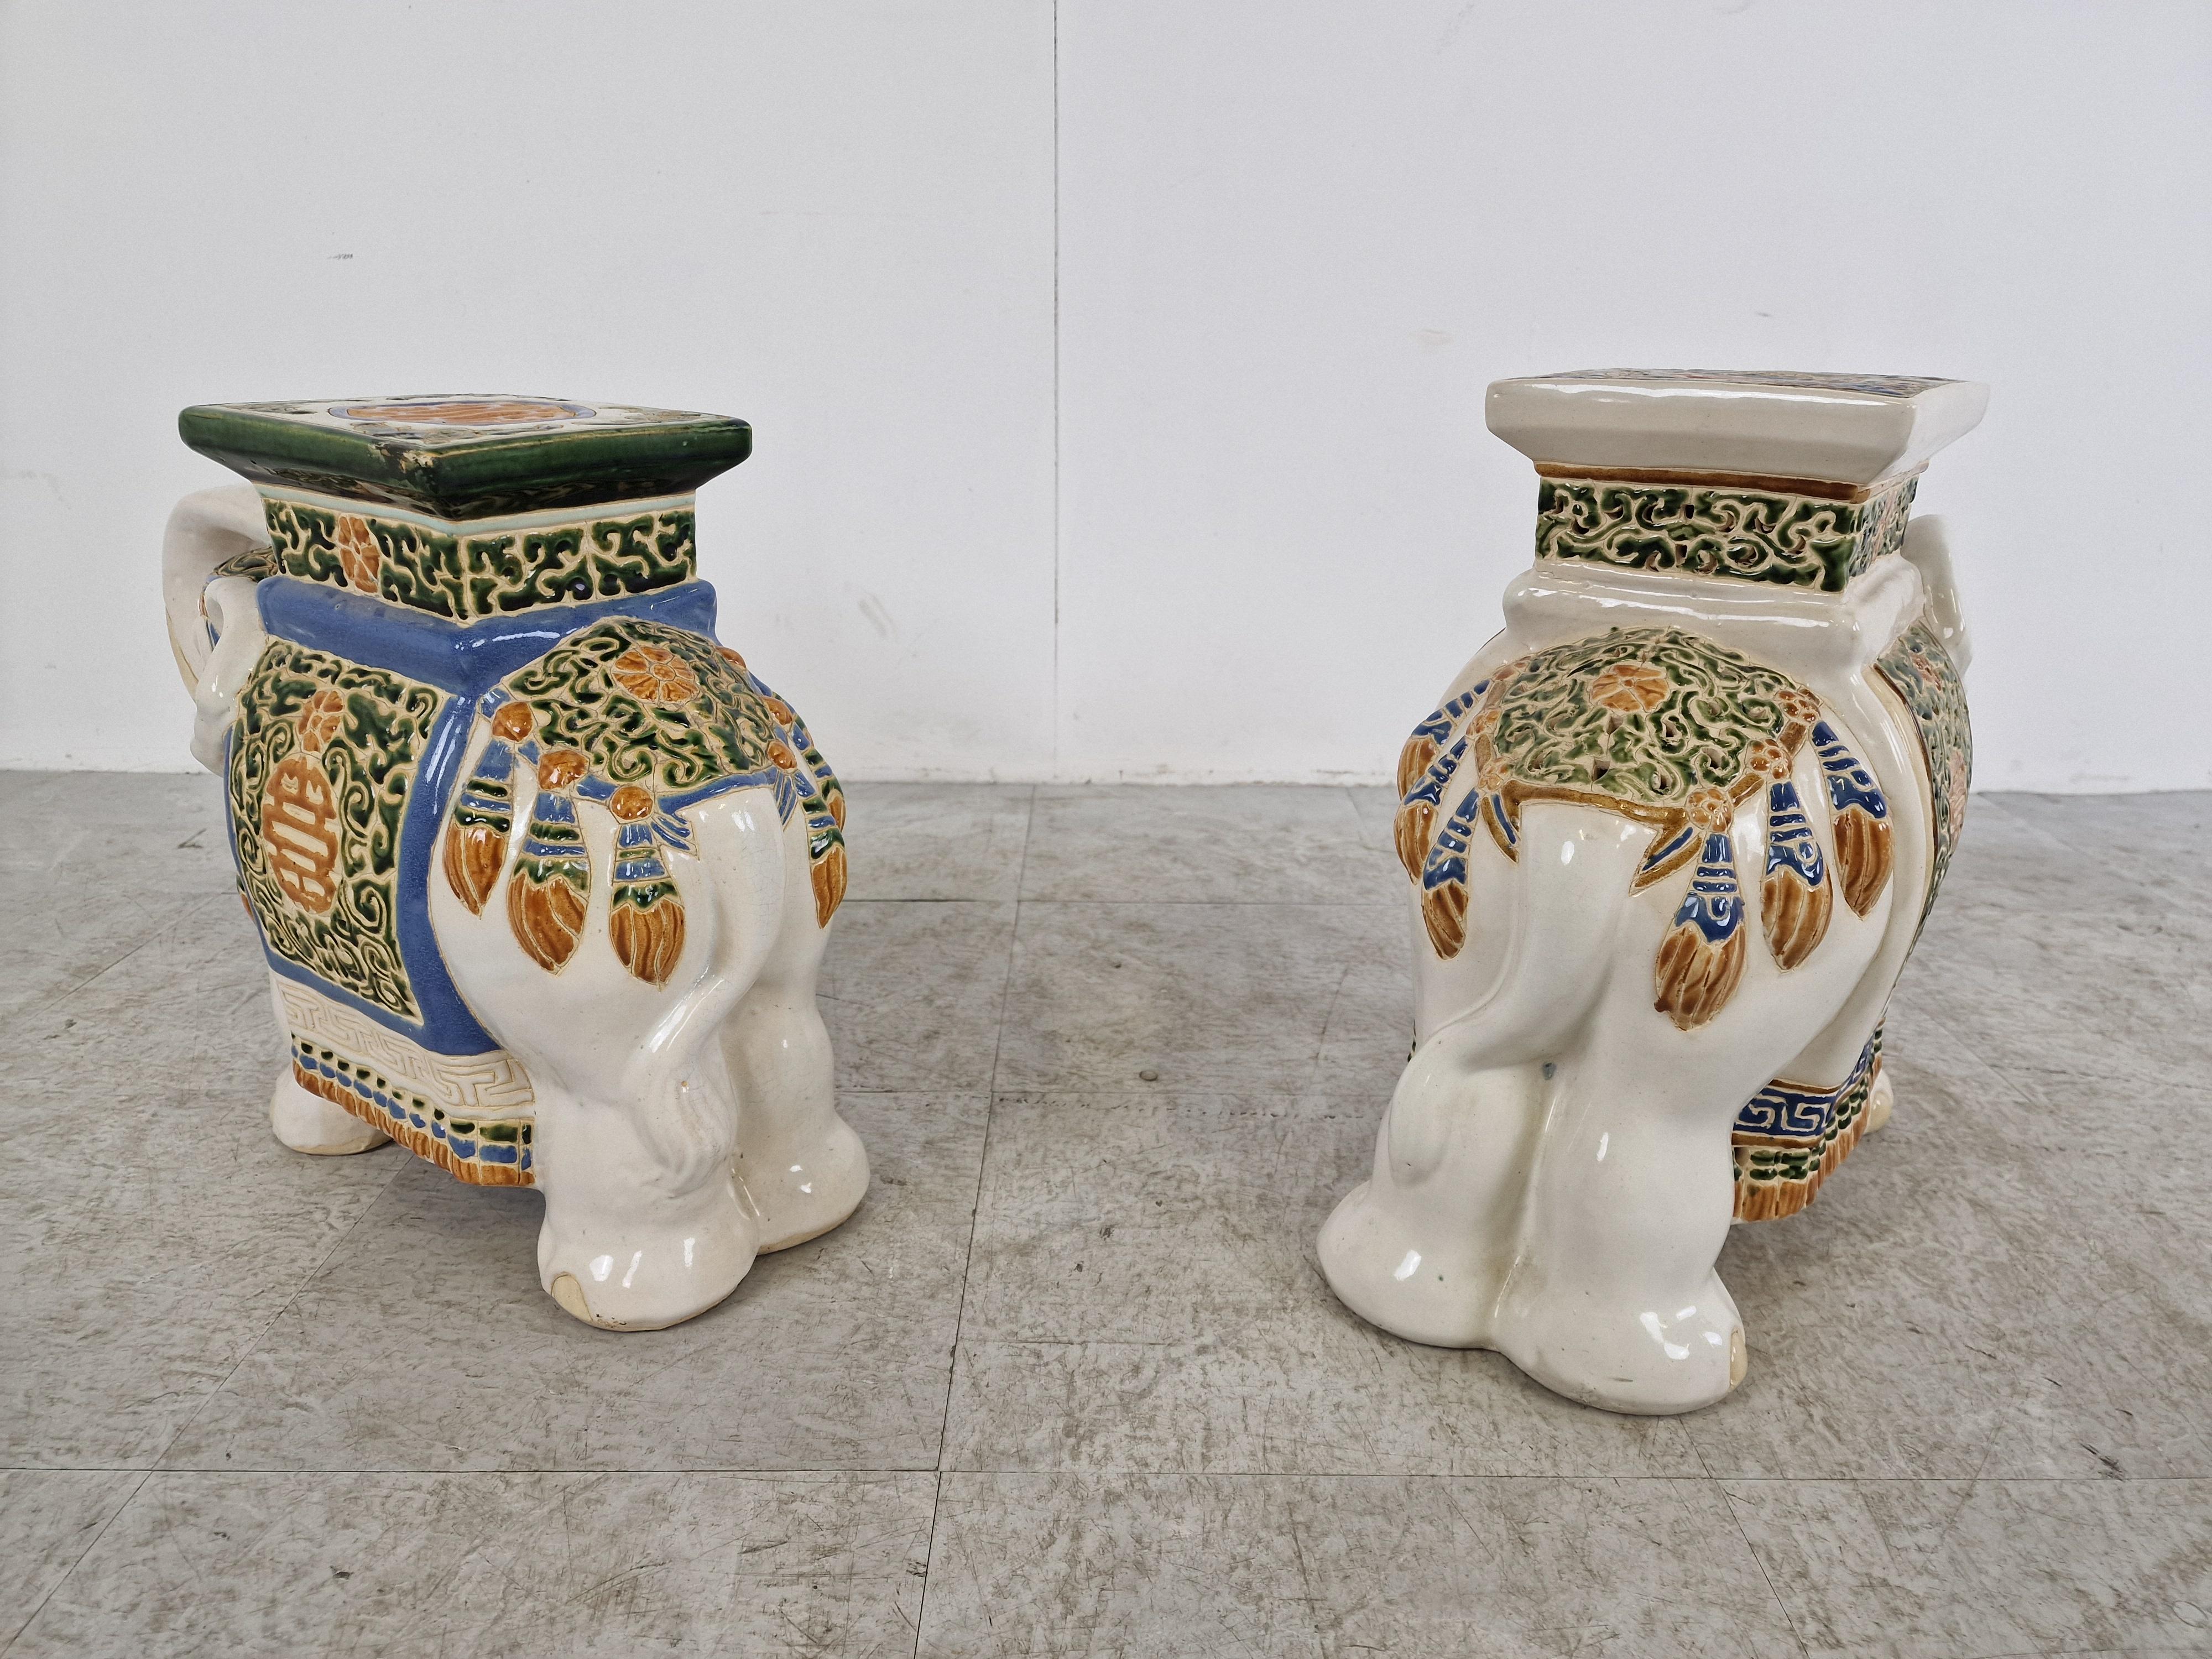 Ceramic Vintage Hollywood Regency Chinese Elephant Plant Stands, set of 2 - 1960s